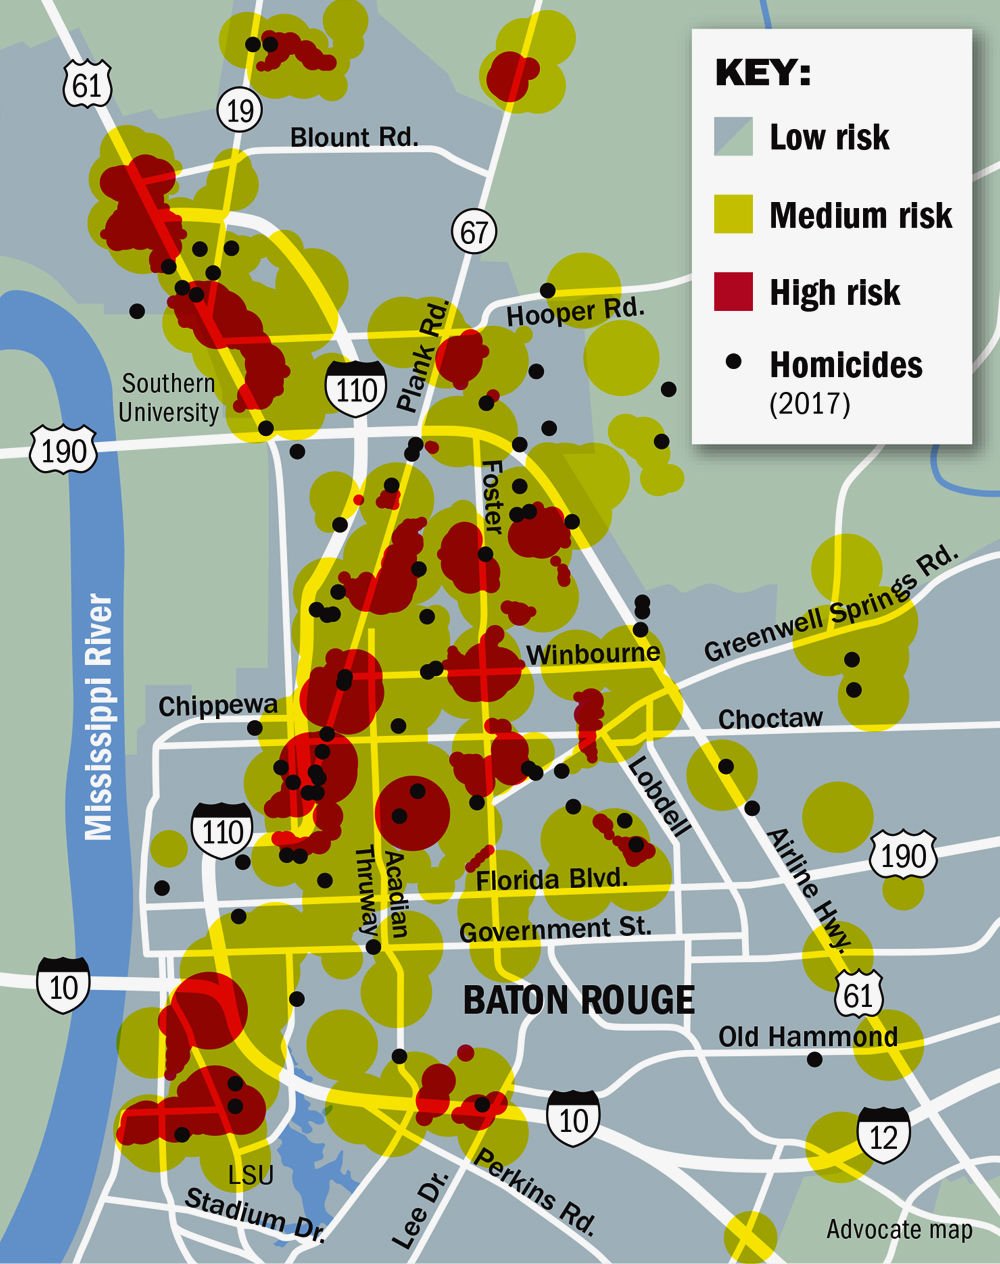 022319 BR Crime Risk Areas.jpg